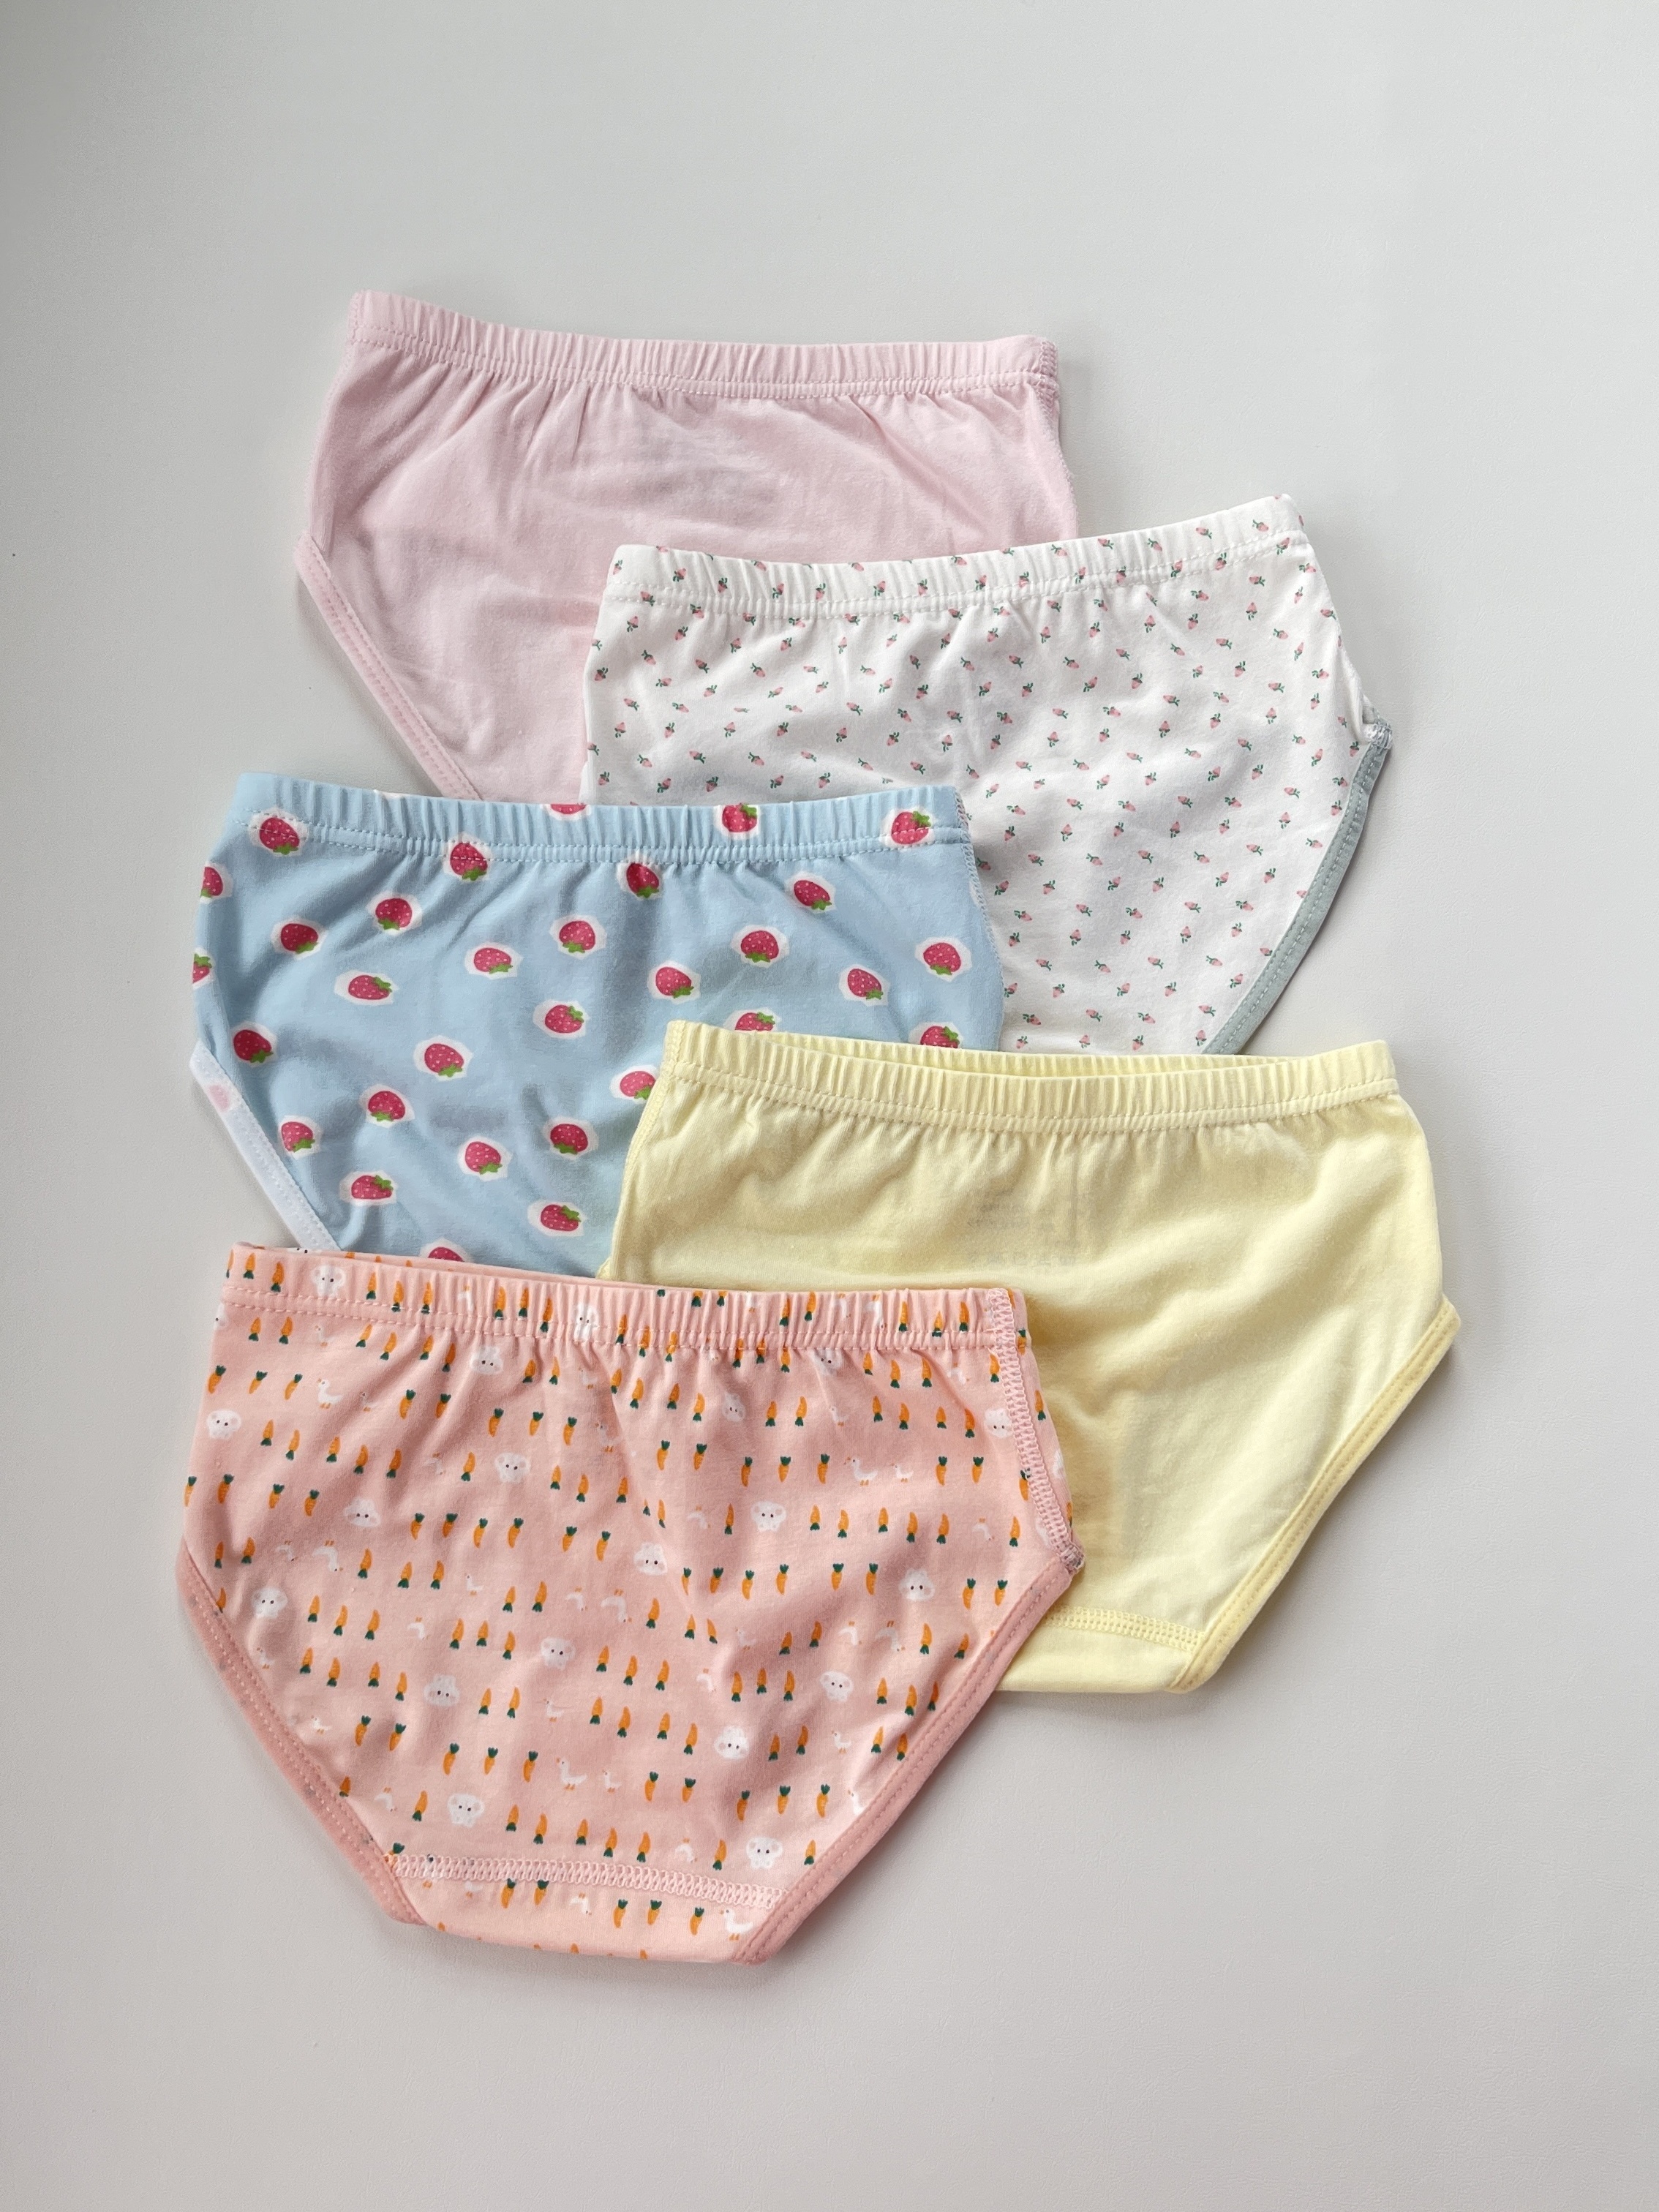 Little Girls' Antibacterial Underwear Cotton Princess Baby Panties